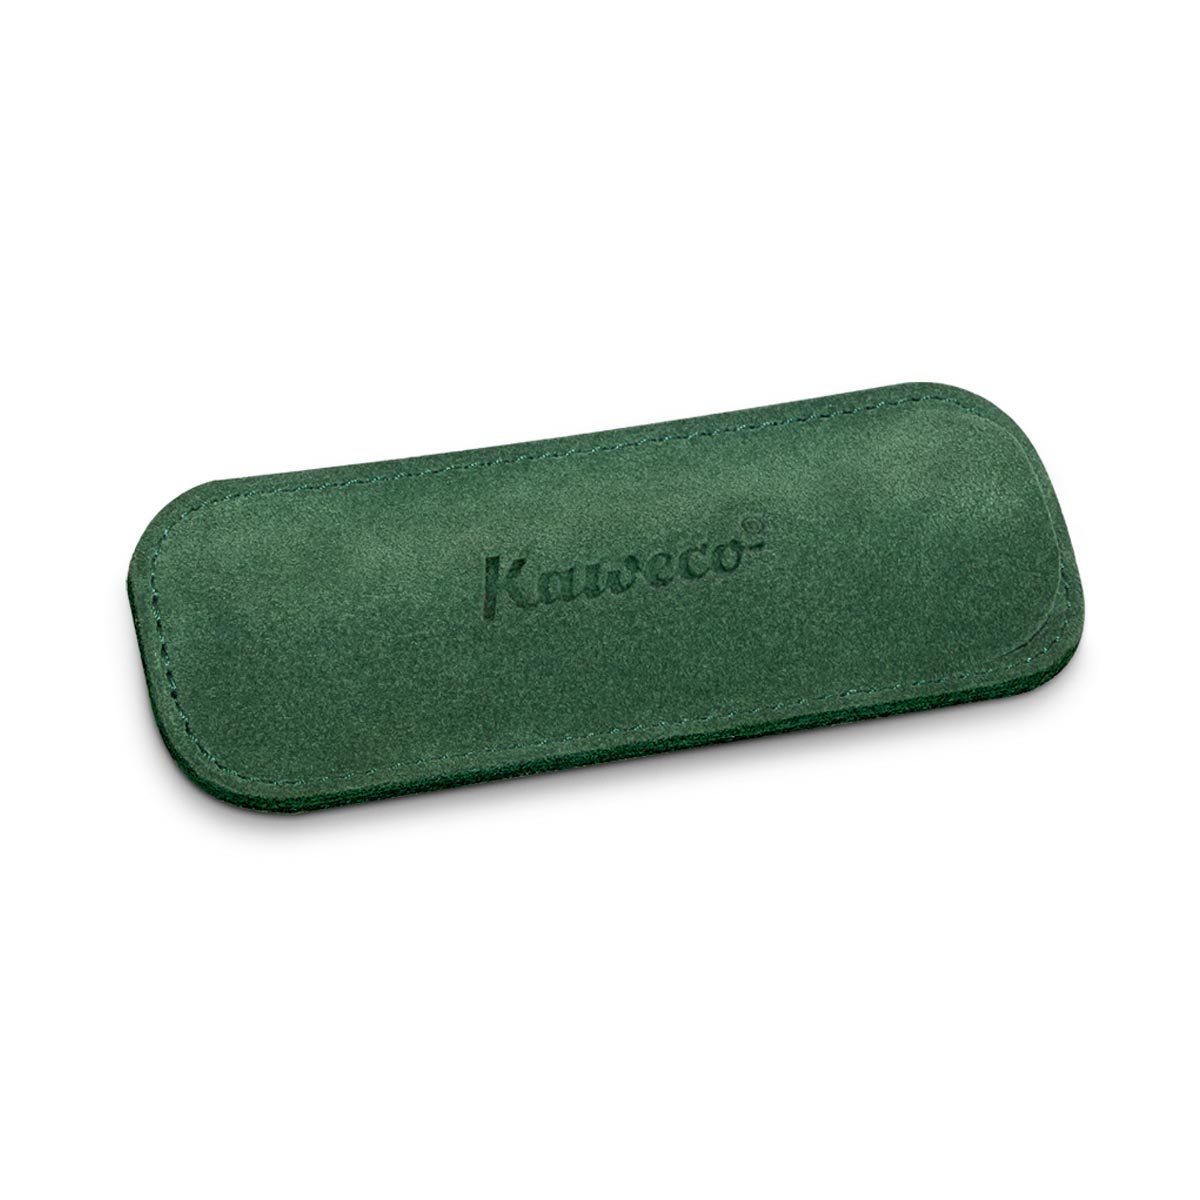 Kaweco SPORT ECO 2 case velor green